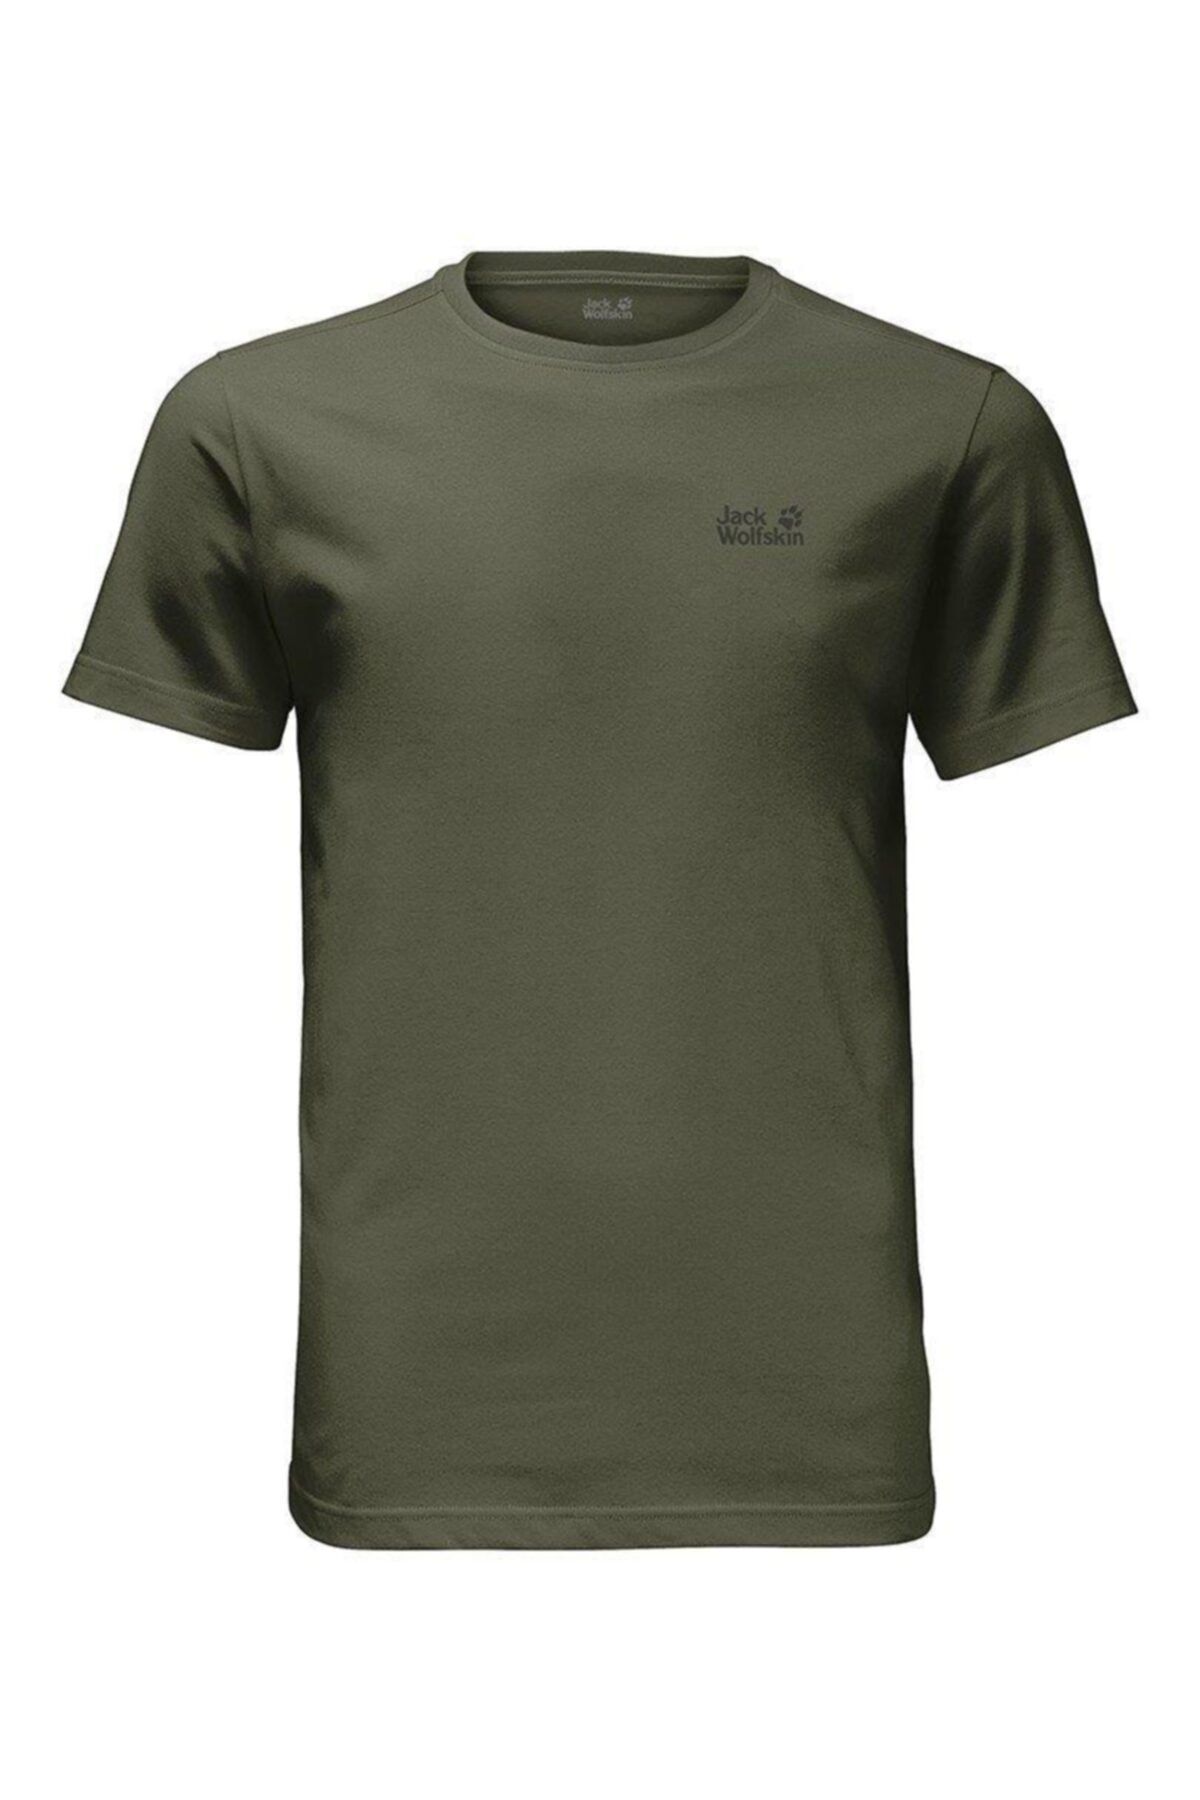 Jack Wolfskin Erkek T-Shirt - Essential T - 1805784